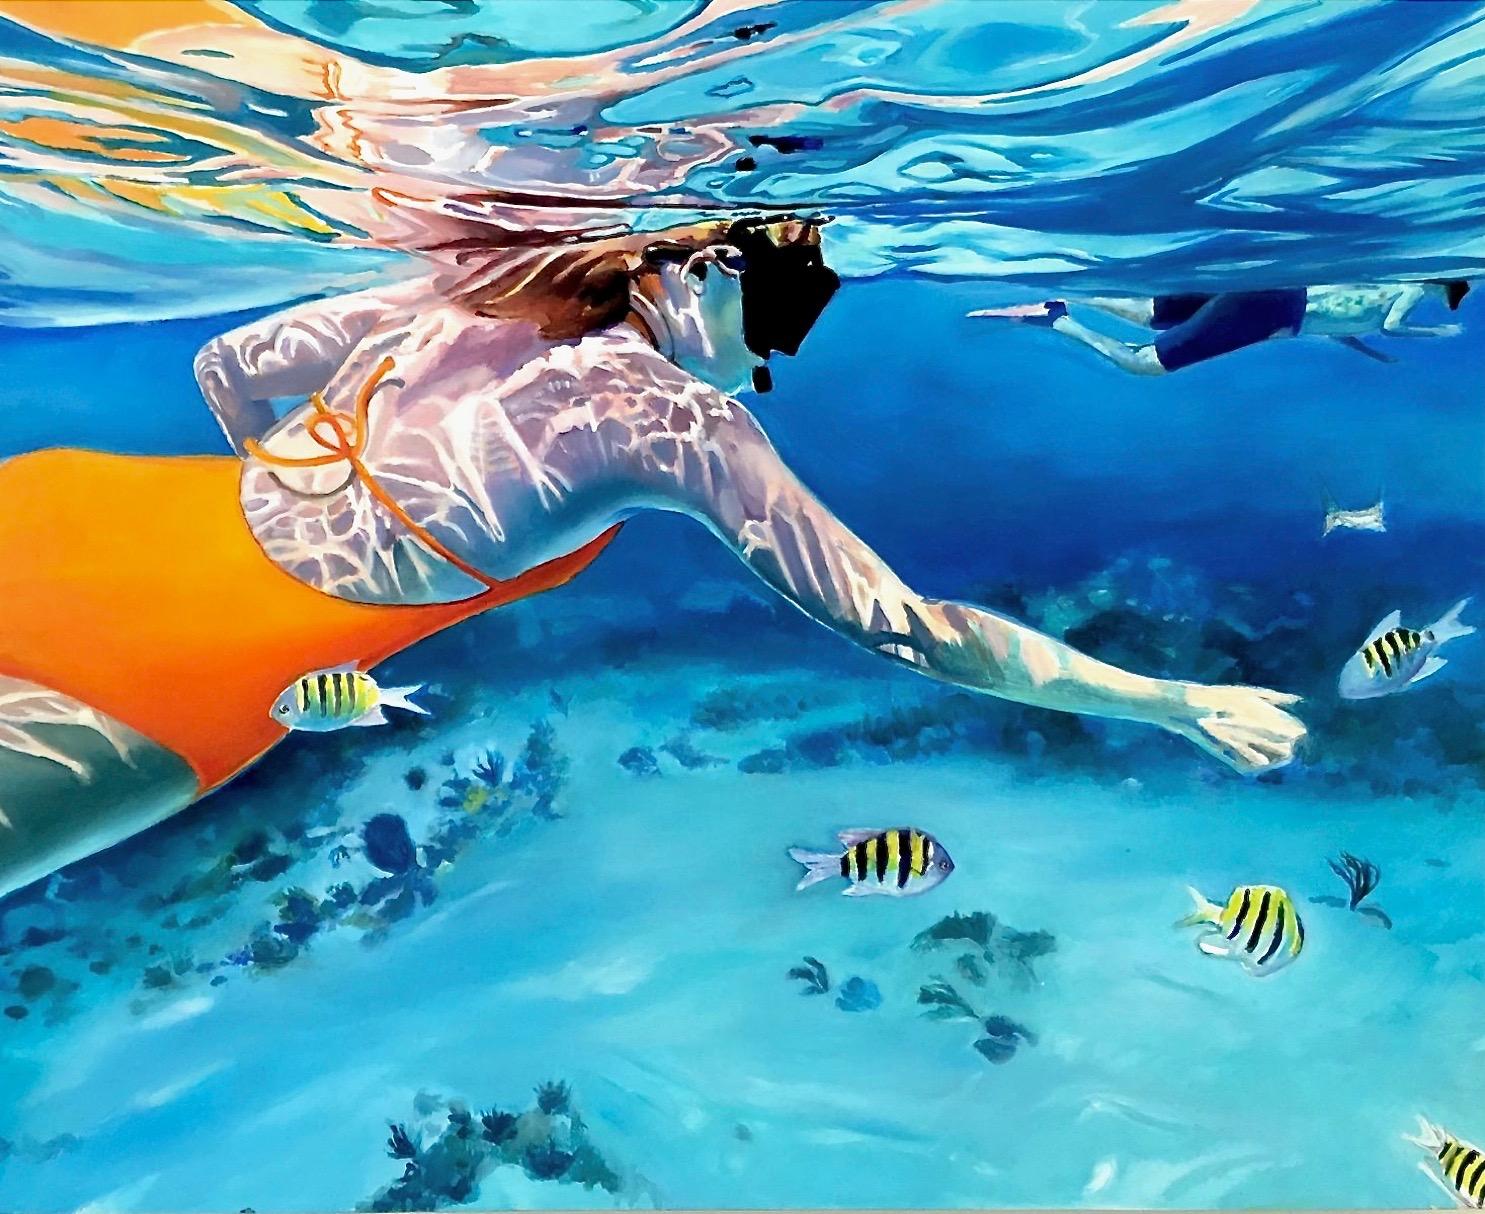 Megan Eisenberg Figurative Painting - "Feeding the Fish"